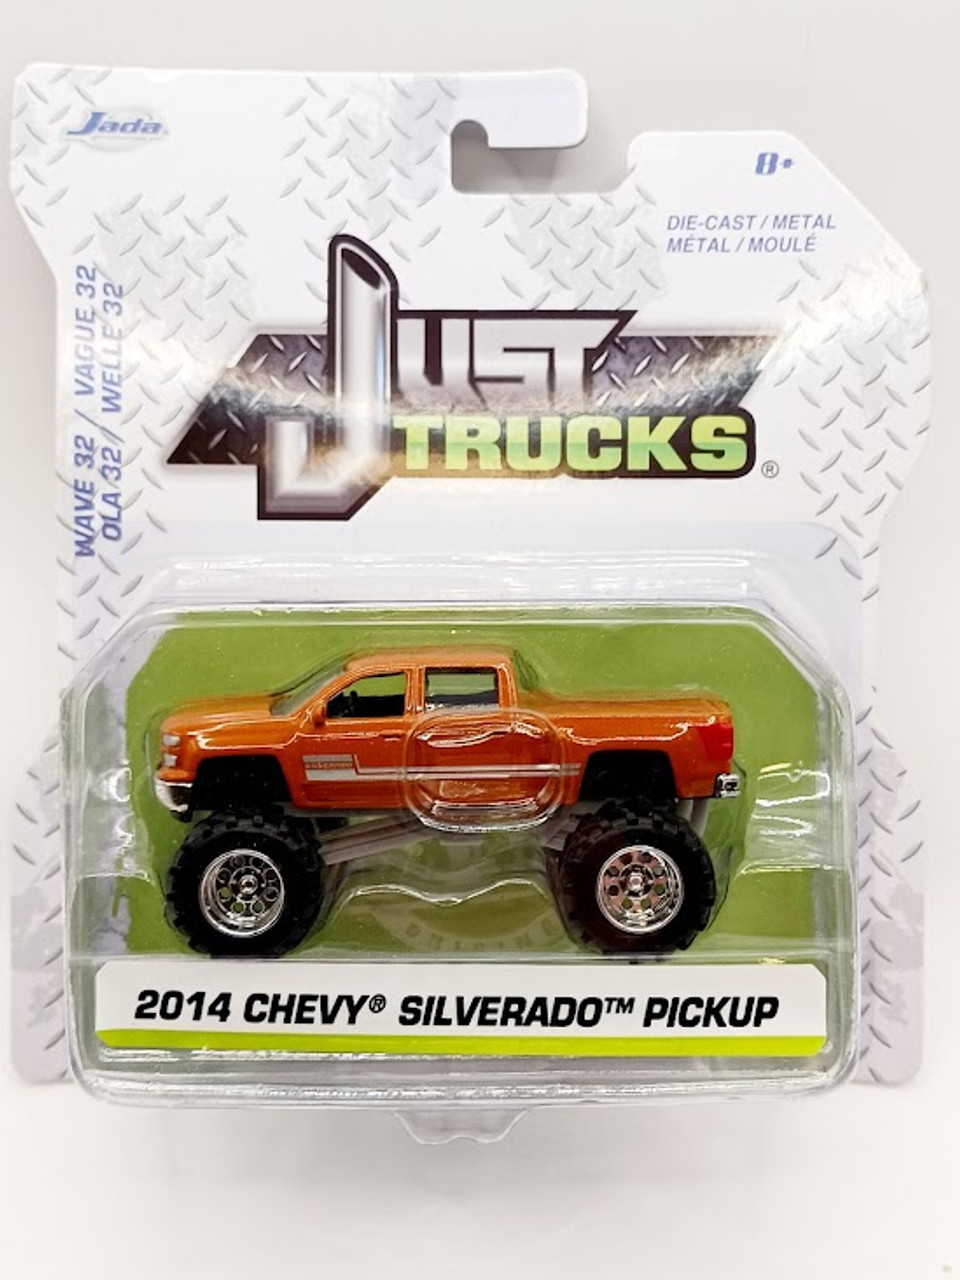 2014 Chevy Silverado Pickup Orange Just Trucks